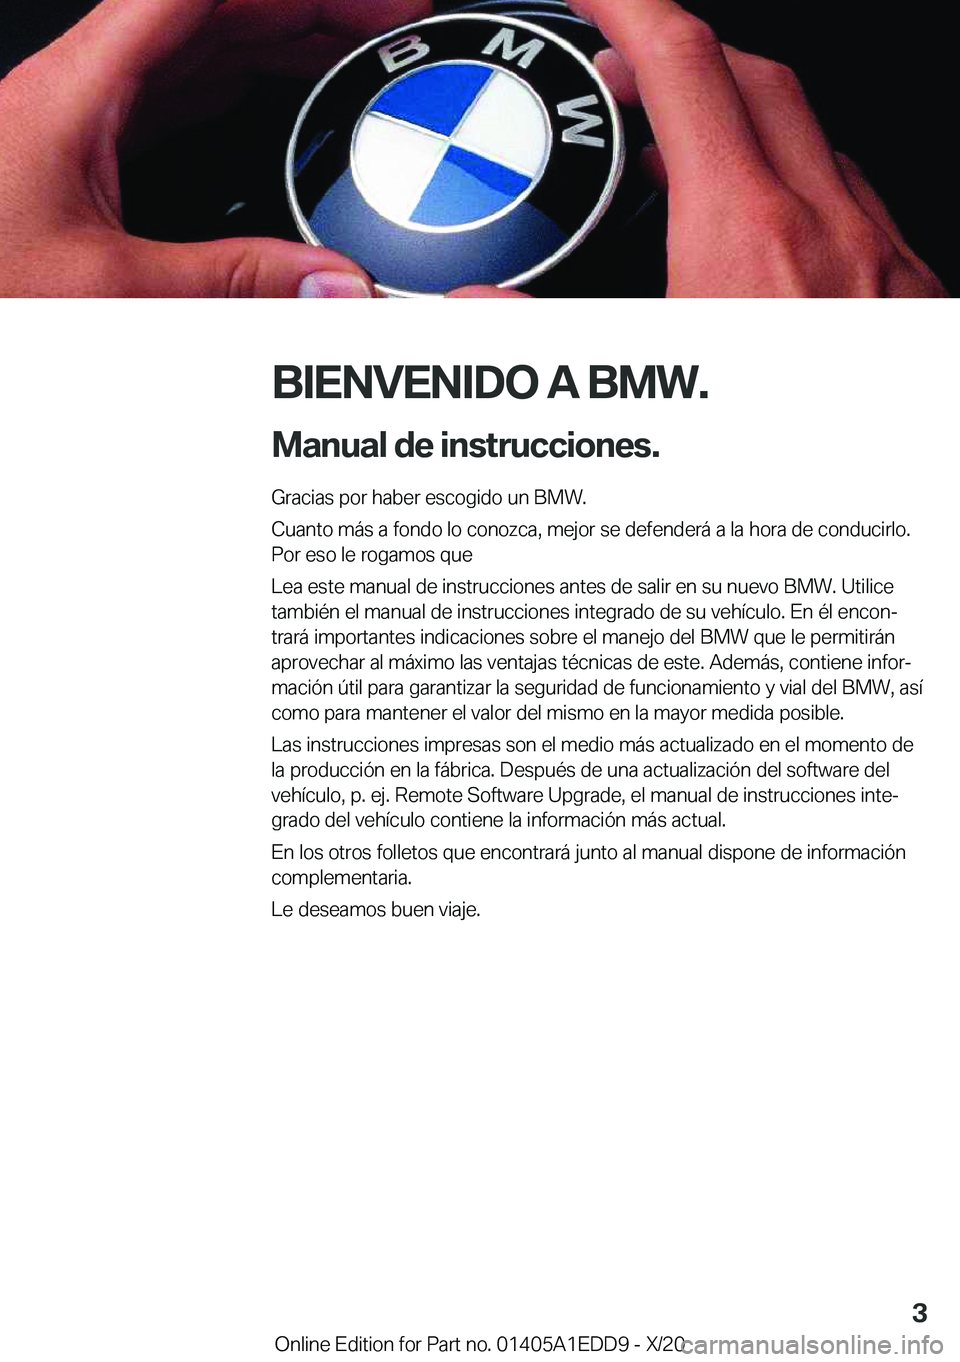 BMW 8 SERIES CONVERTIBLE 2021  Manuales de Empleo (in Spanish) �B�I�E�N�V�E�N�I�D�O��A��B�M�W�.
�M�a�n�u�a�l��d�e��i�n�s�t�r�u�c�c�i�o�n�e�s�. �G�r�a�c�i�a�s��p�o�r��h�a�b�e�r��e�s�c�o�g�i�d�o��u�n��B�M�W�.
�C�u�a�n�t�o��m�